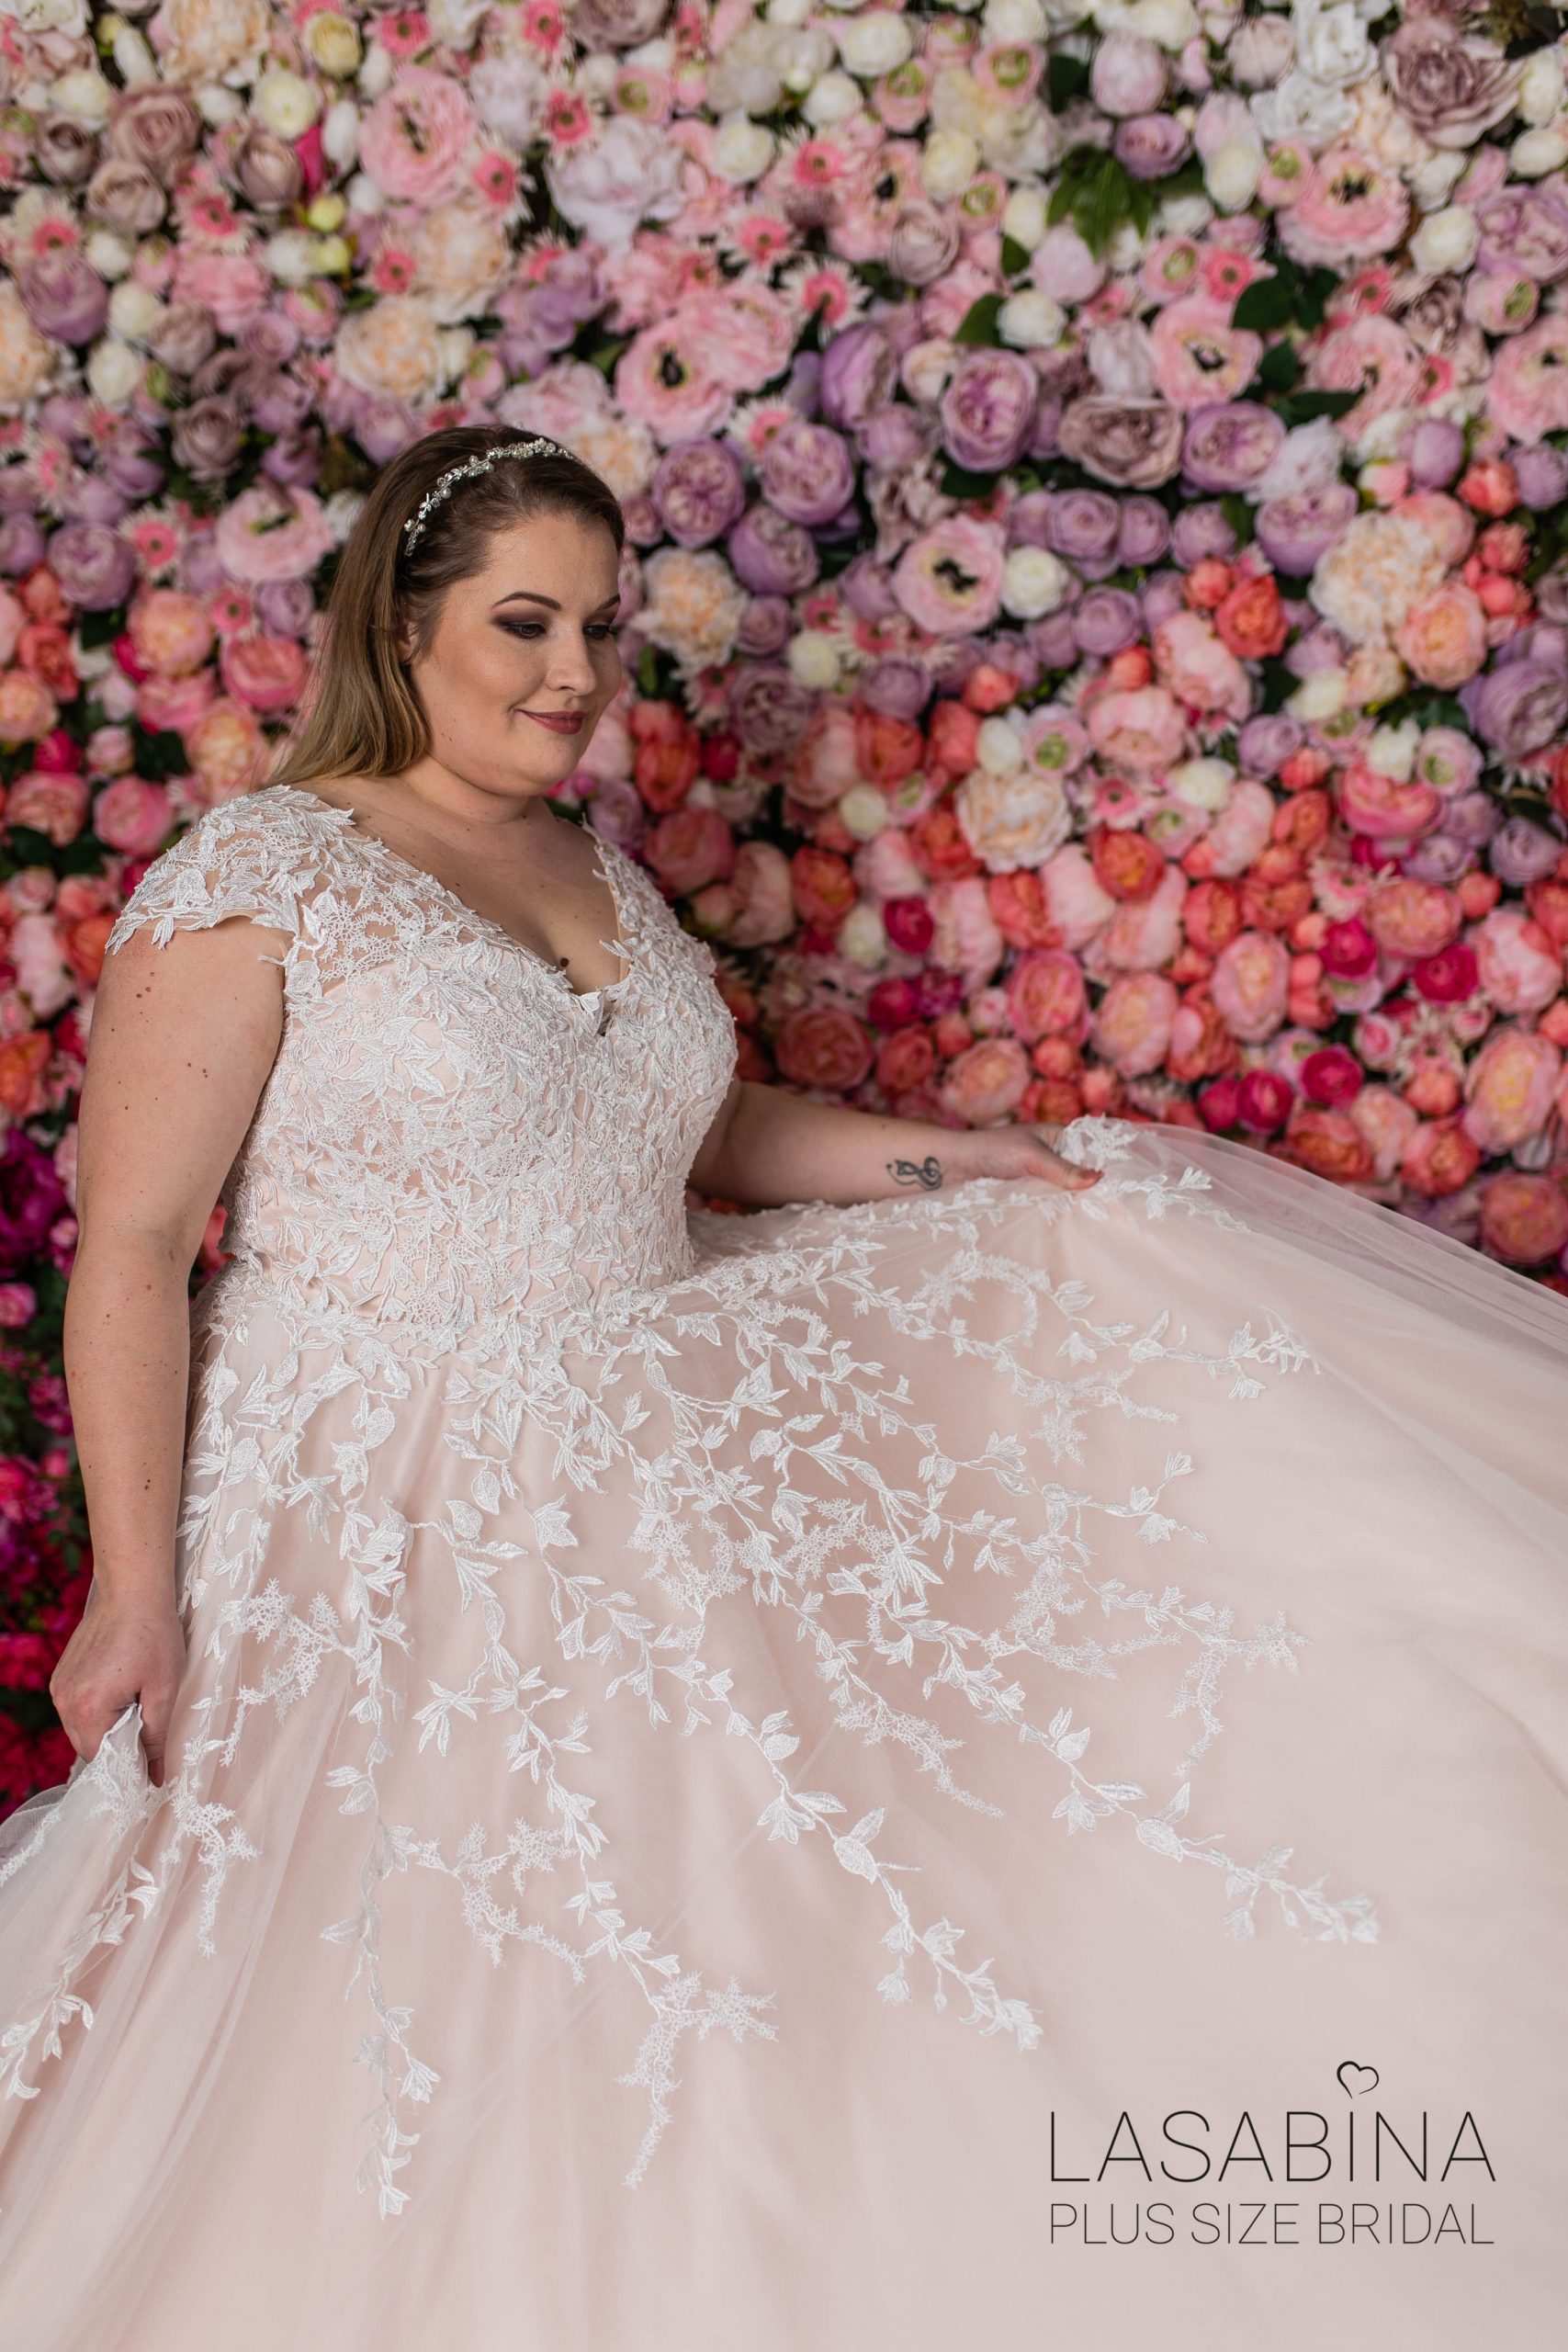 VENUS plus size wedding dress - LASABINA Plus Size Bridal